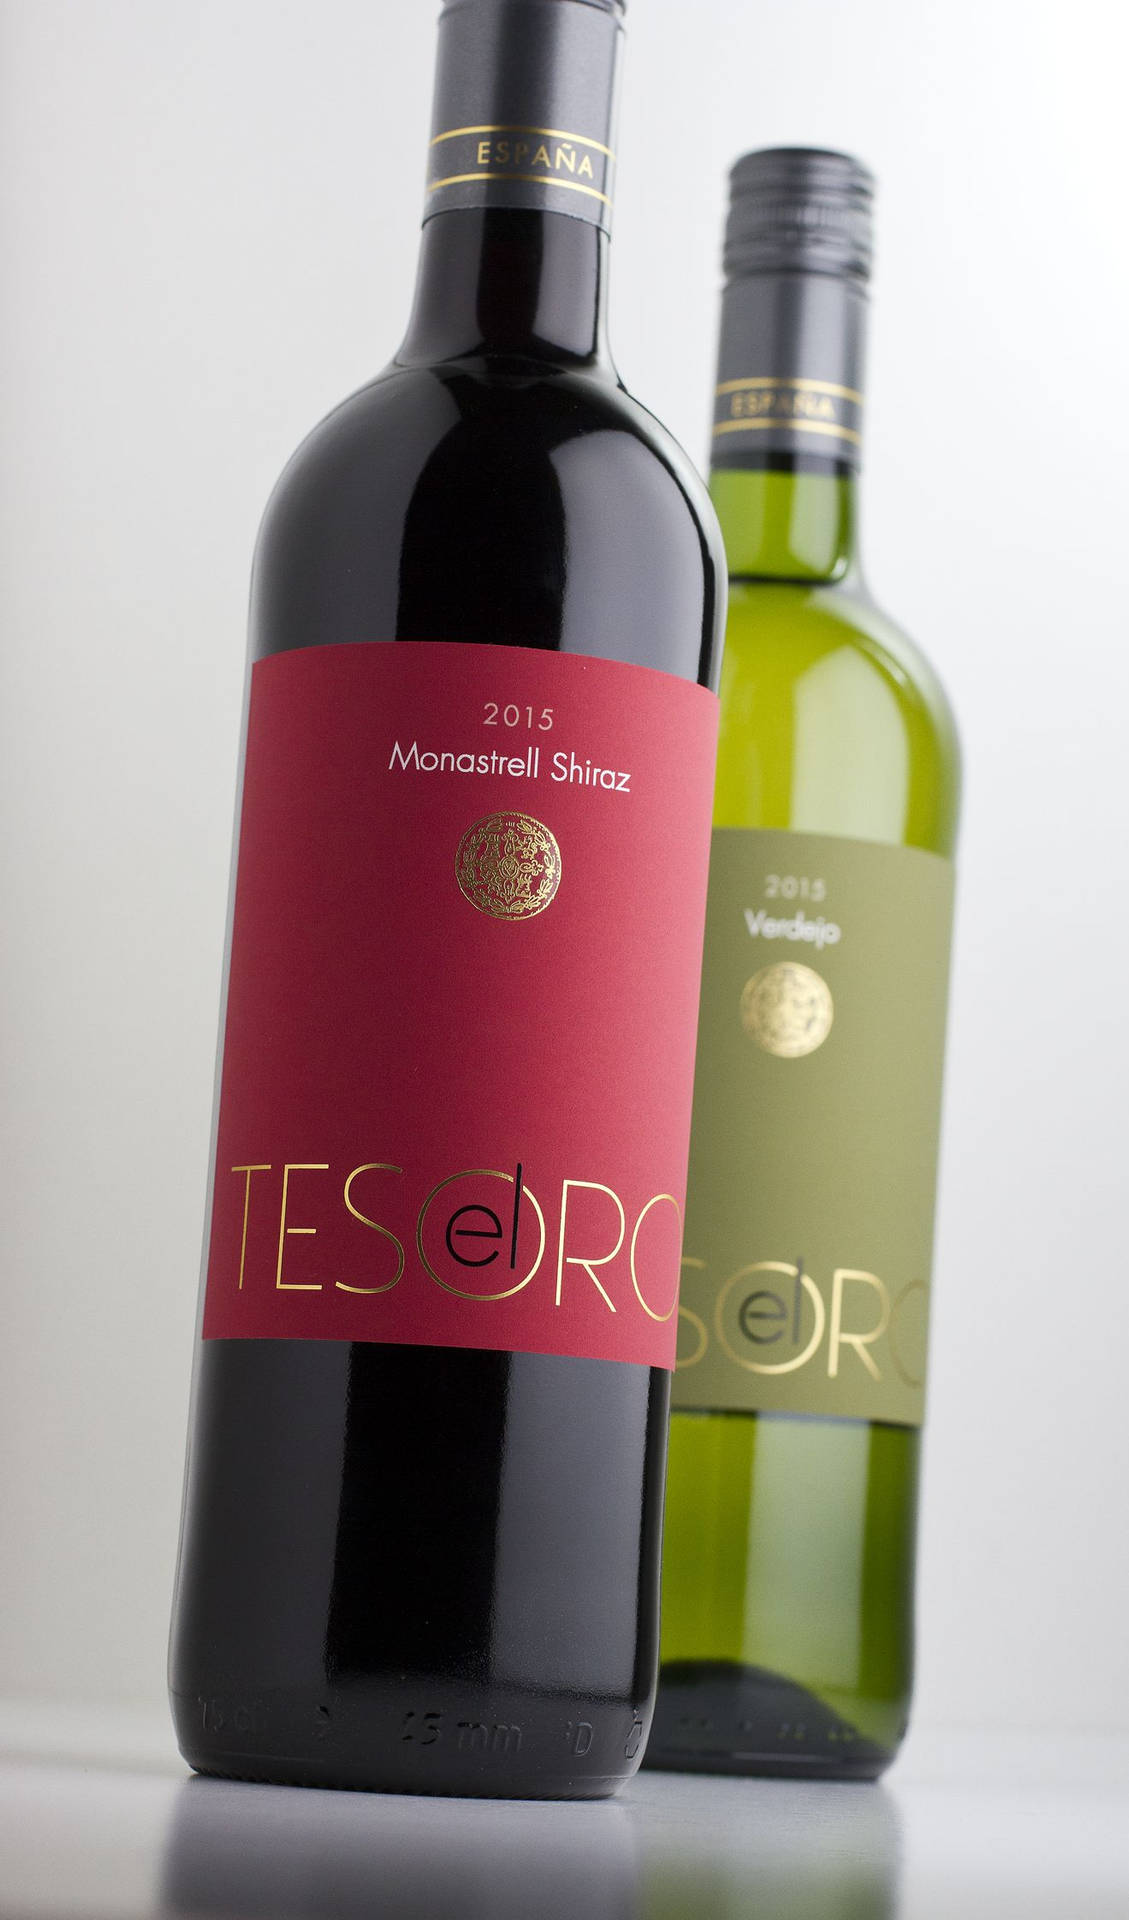 El Tesoro Monastrell Shiraz And Verdejo Wine Wallpaper